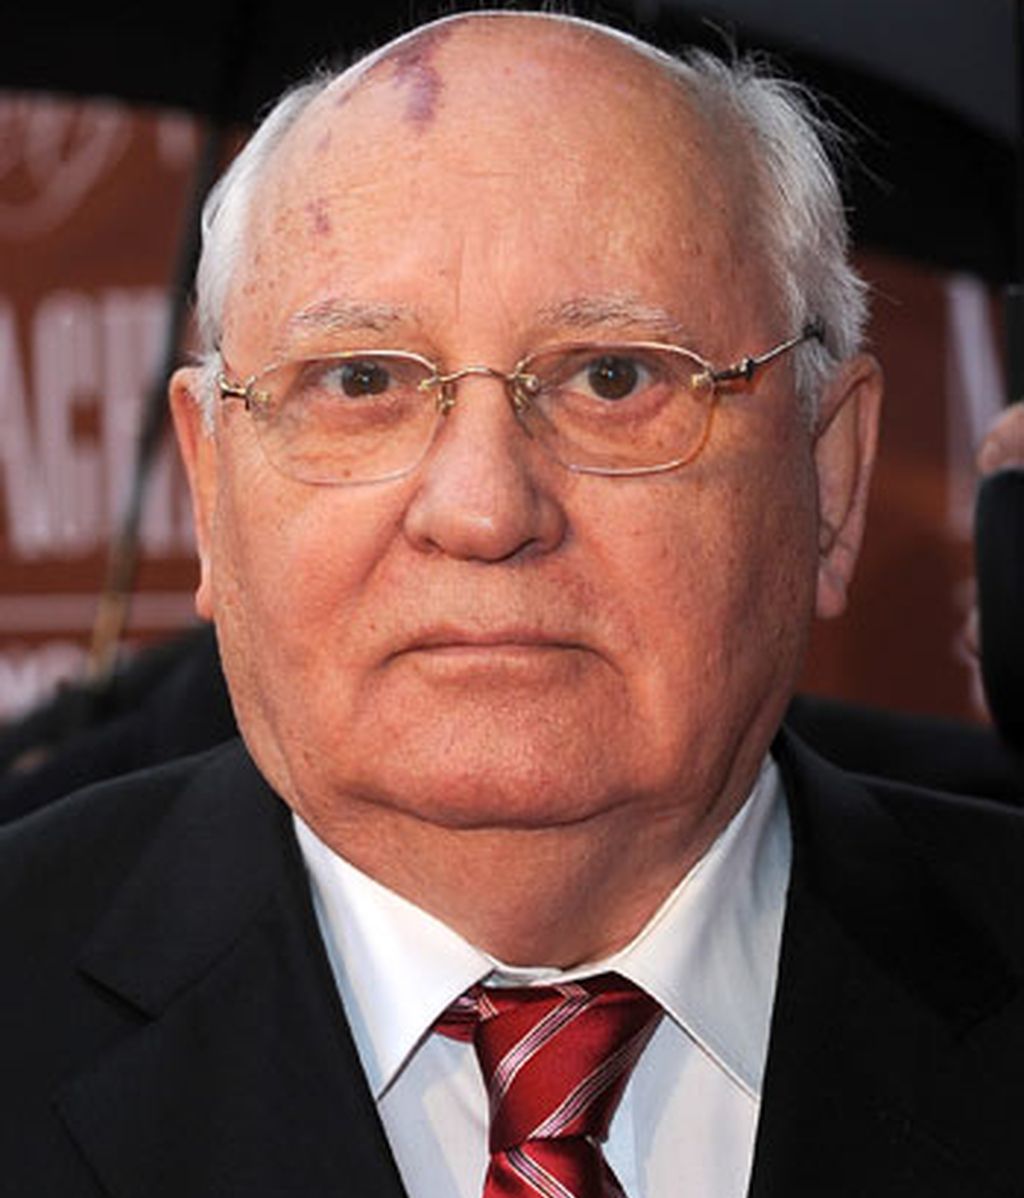 Mijail Gorbachov celebra su 80 cumpleaños rodeado de famosos